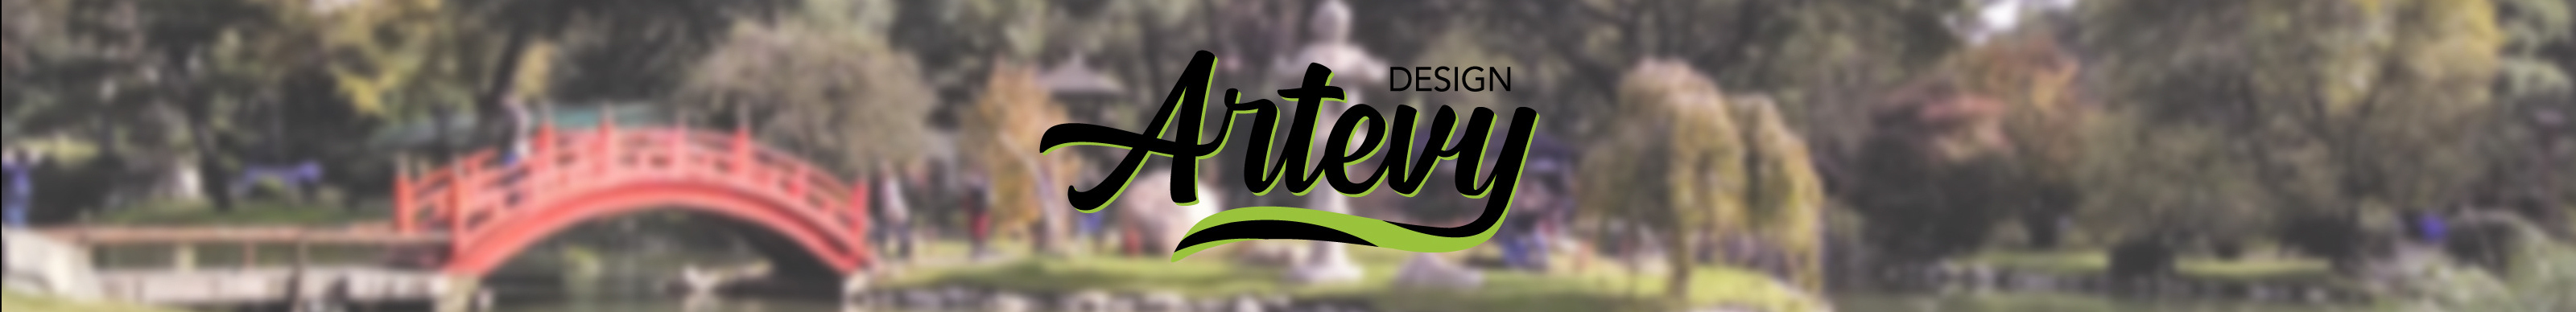 Artevy Design's profile banner